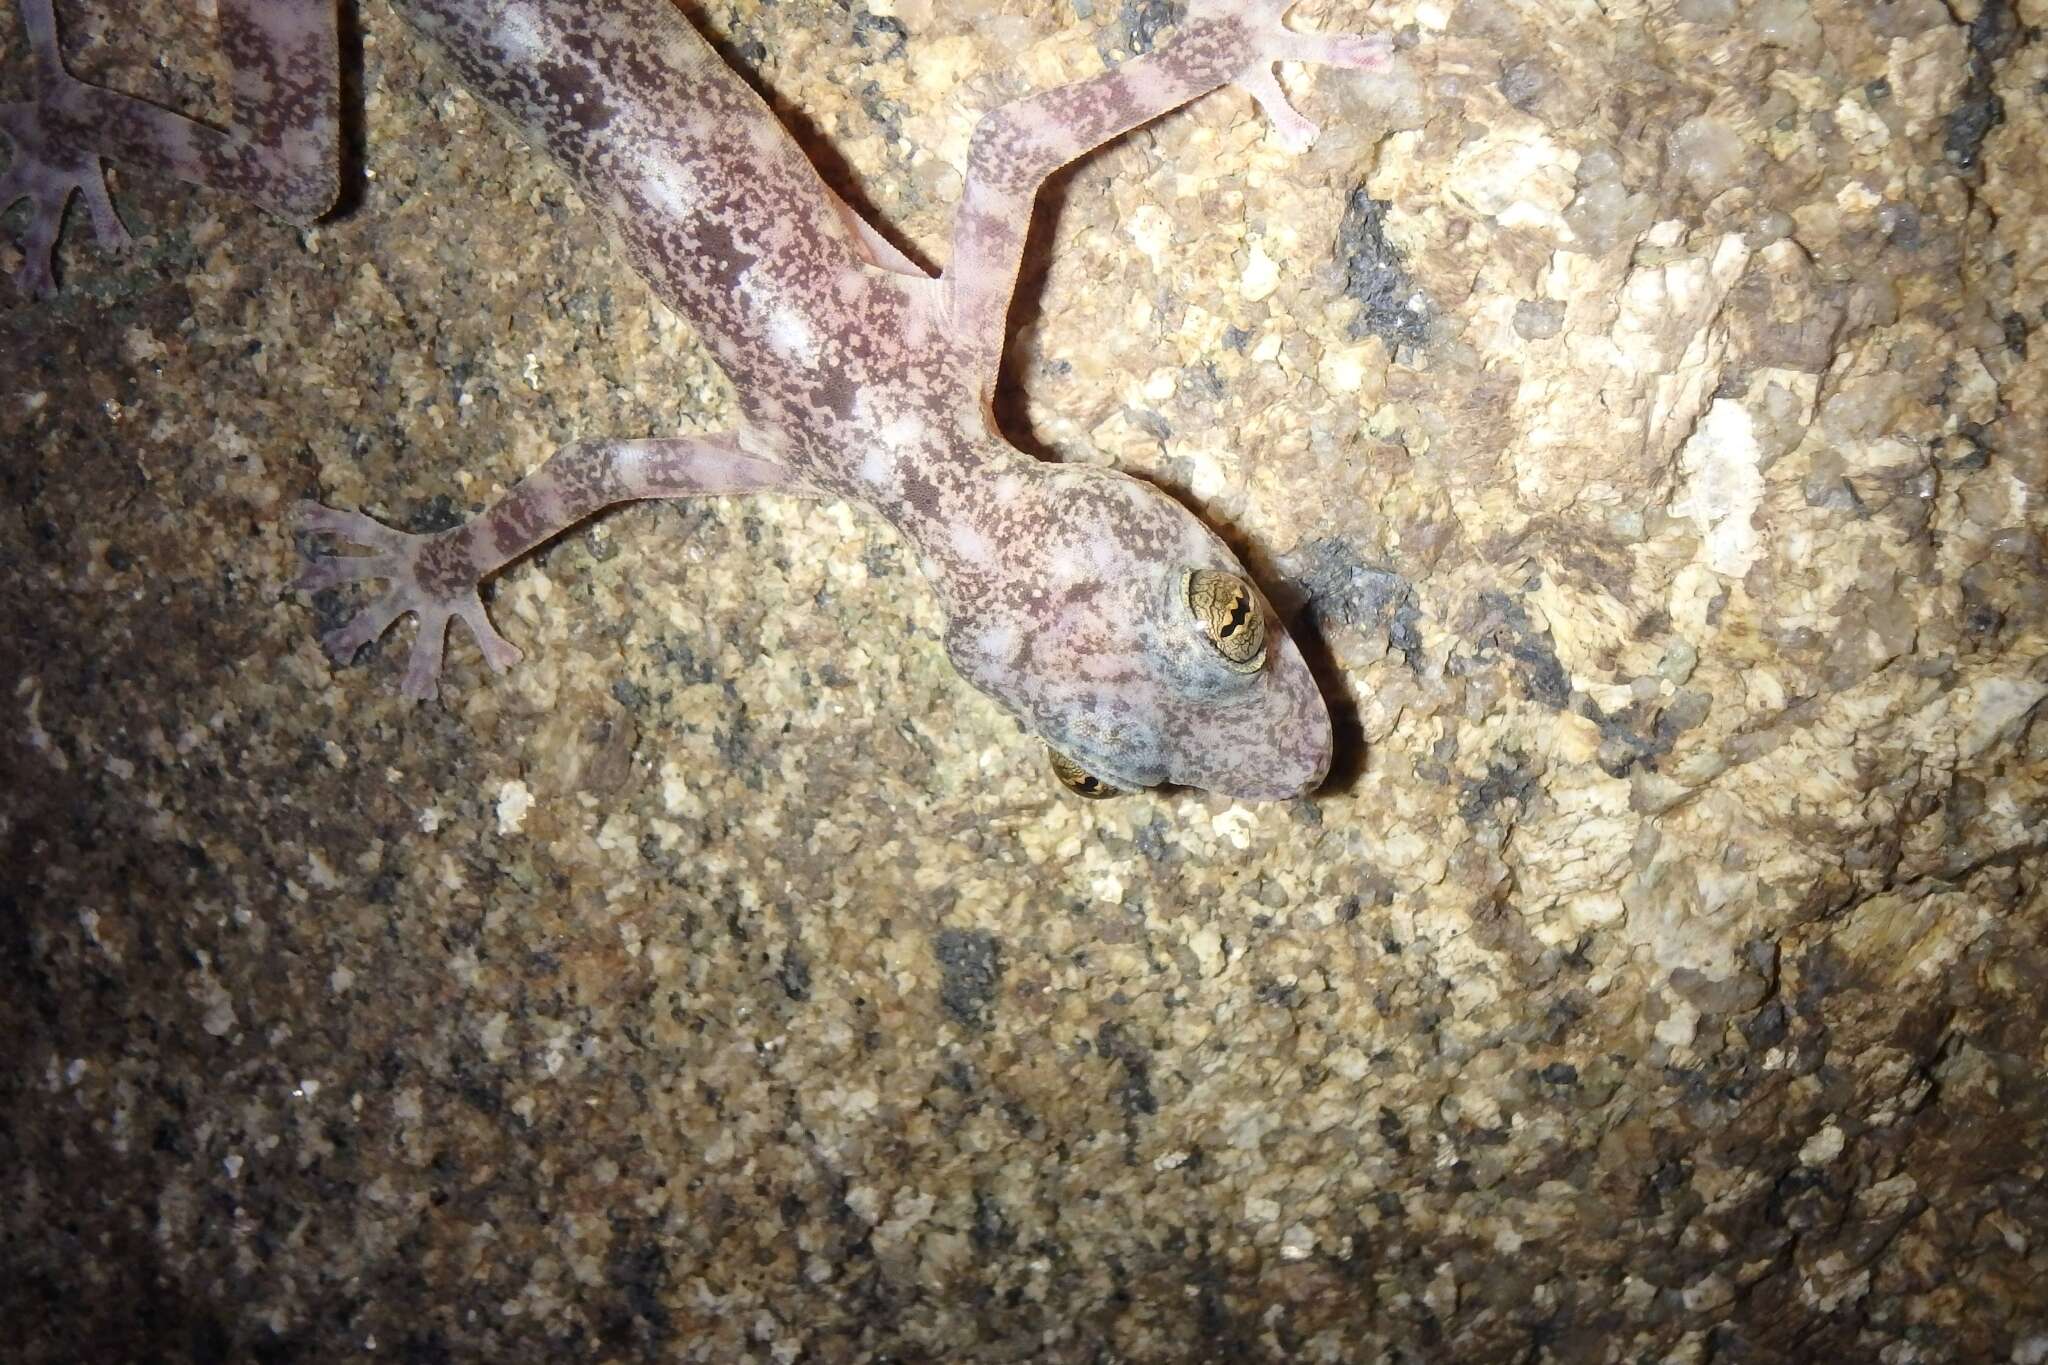 Image of Illingworth's Gecko